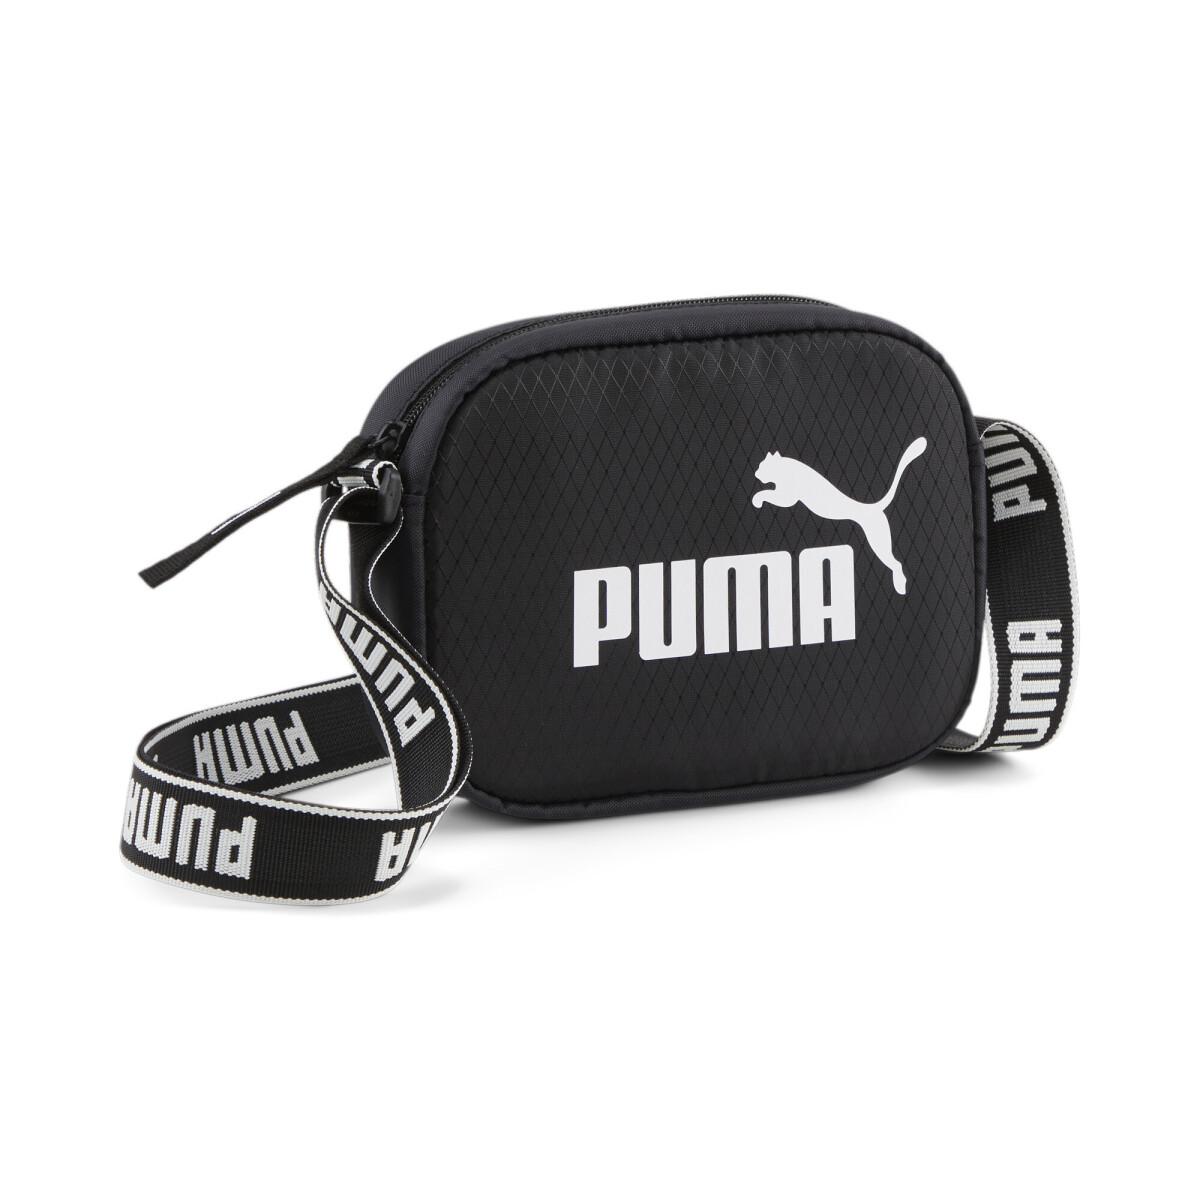 Bolso Puma Core Base Large Shop negro blanco mujer